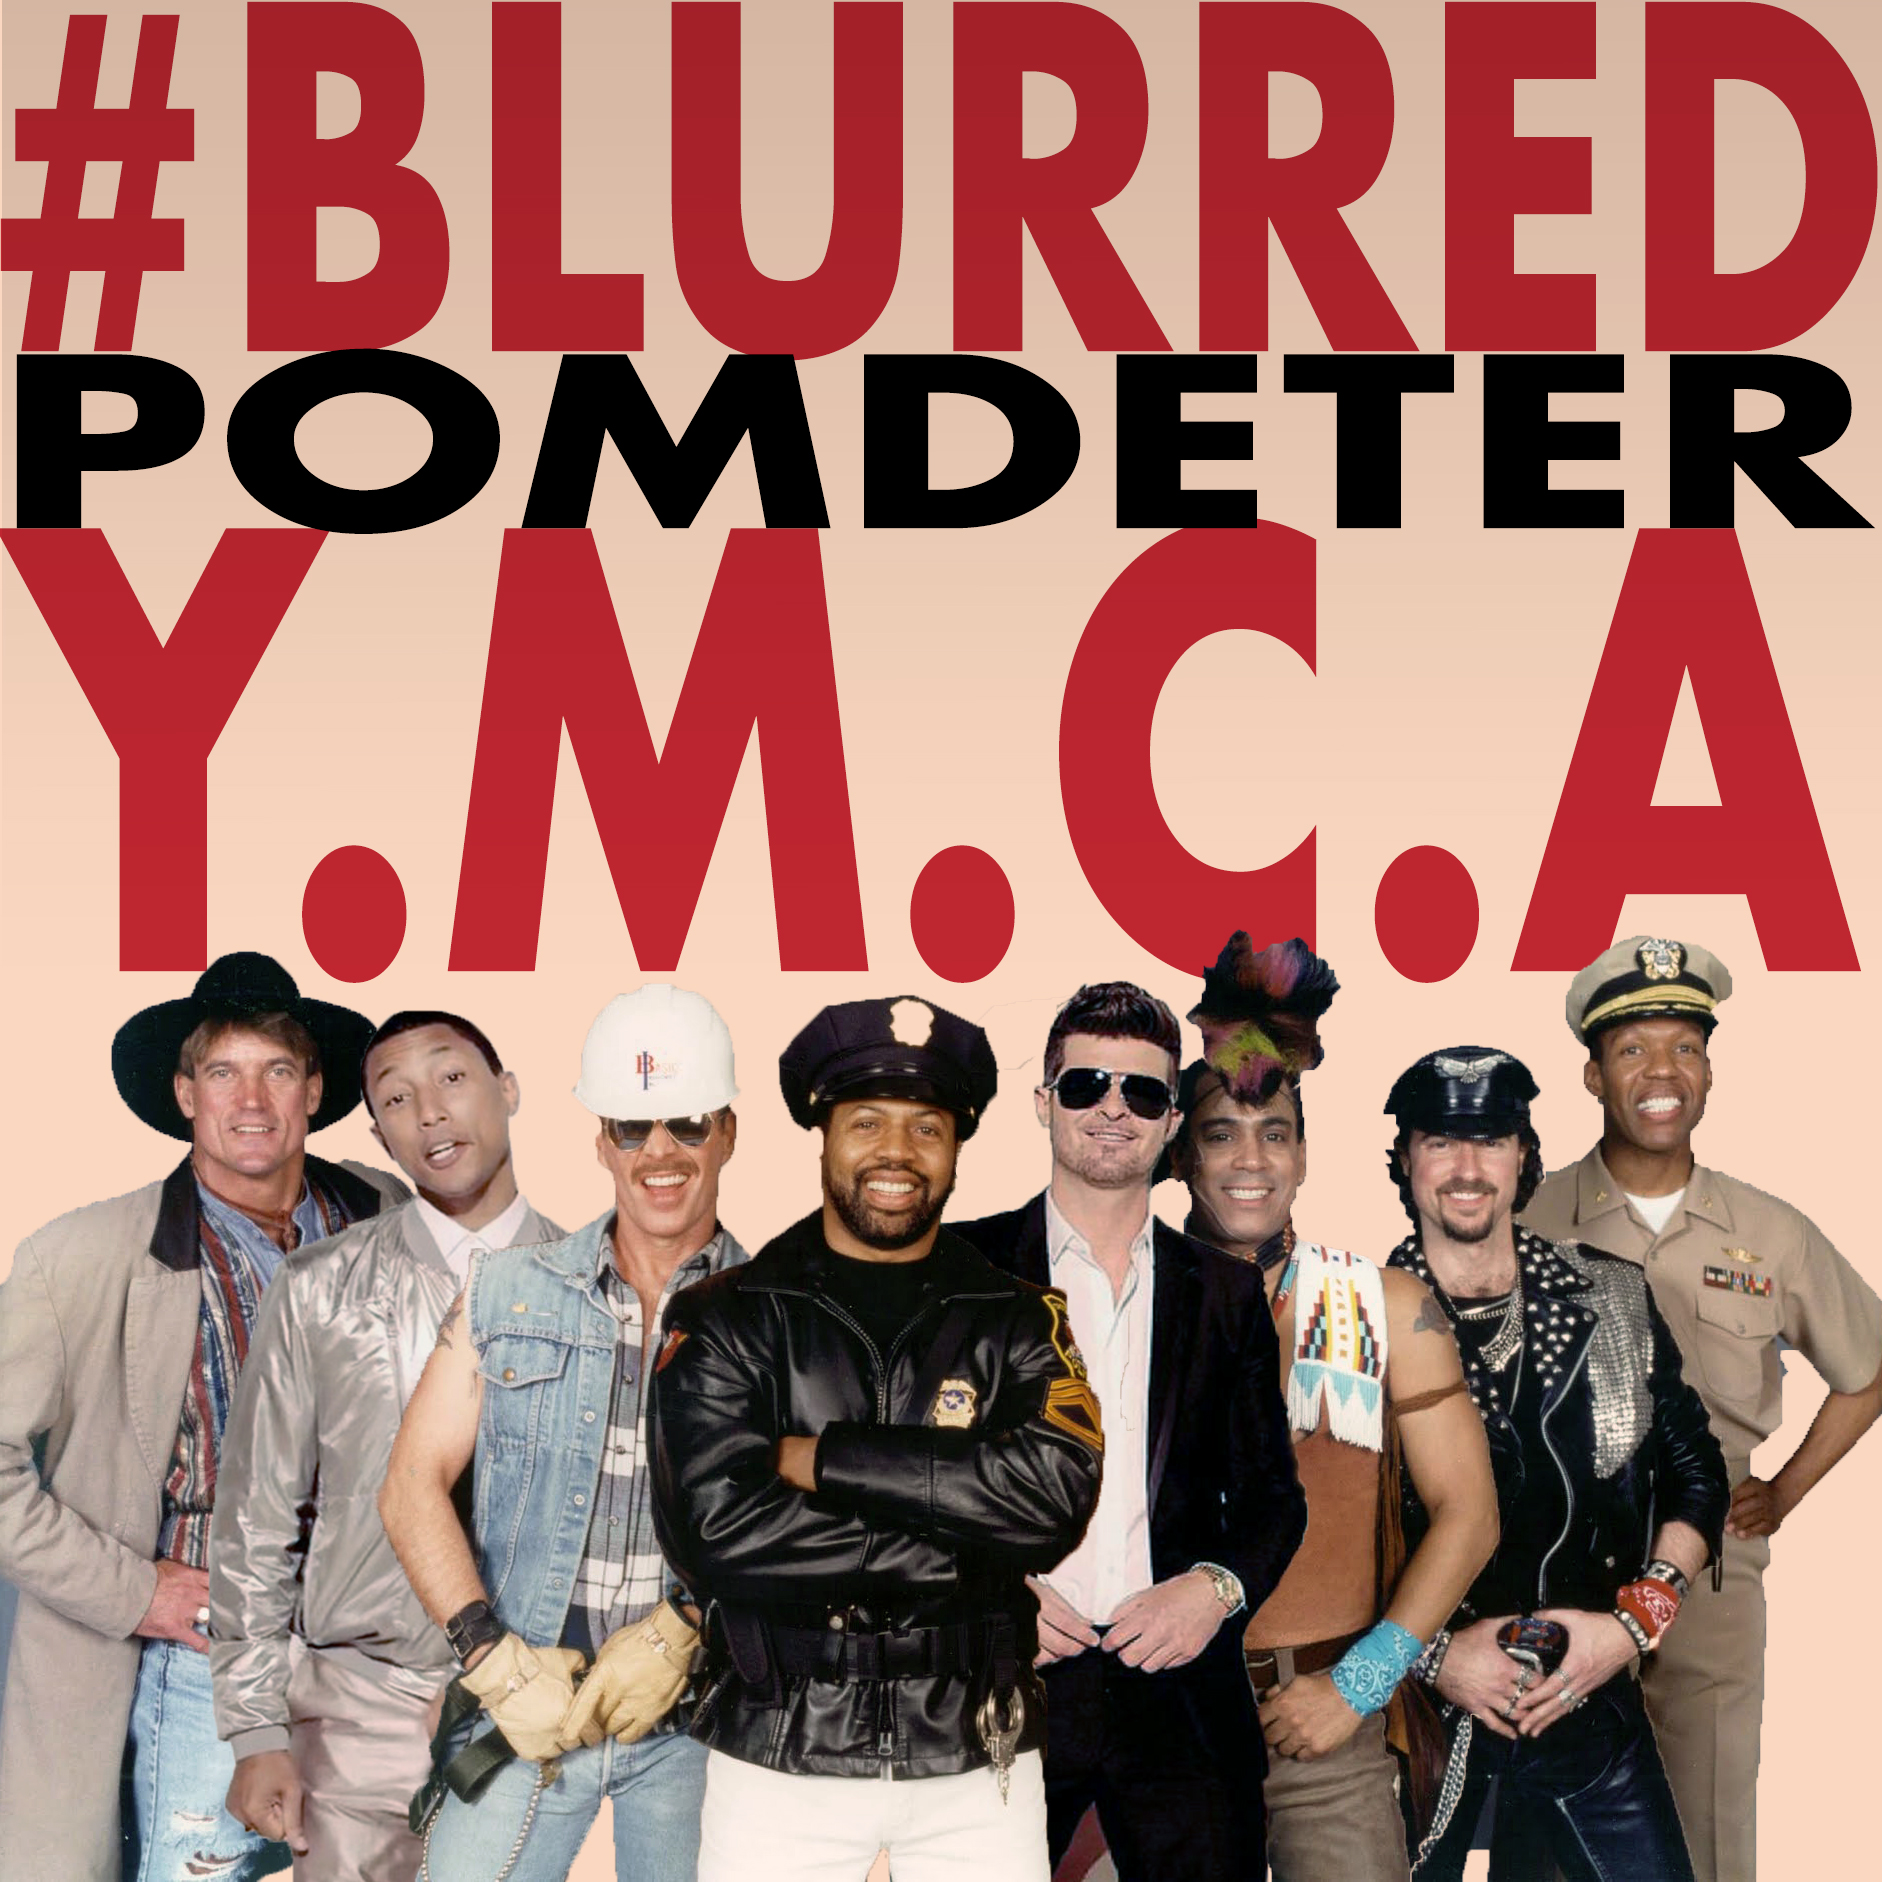 Pomdeter Blurred YMCA